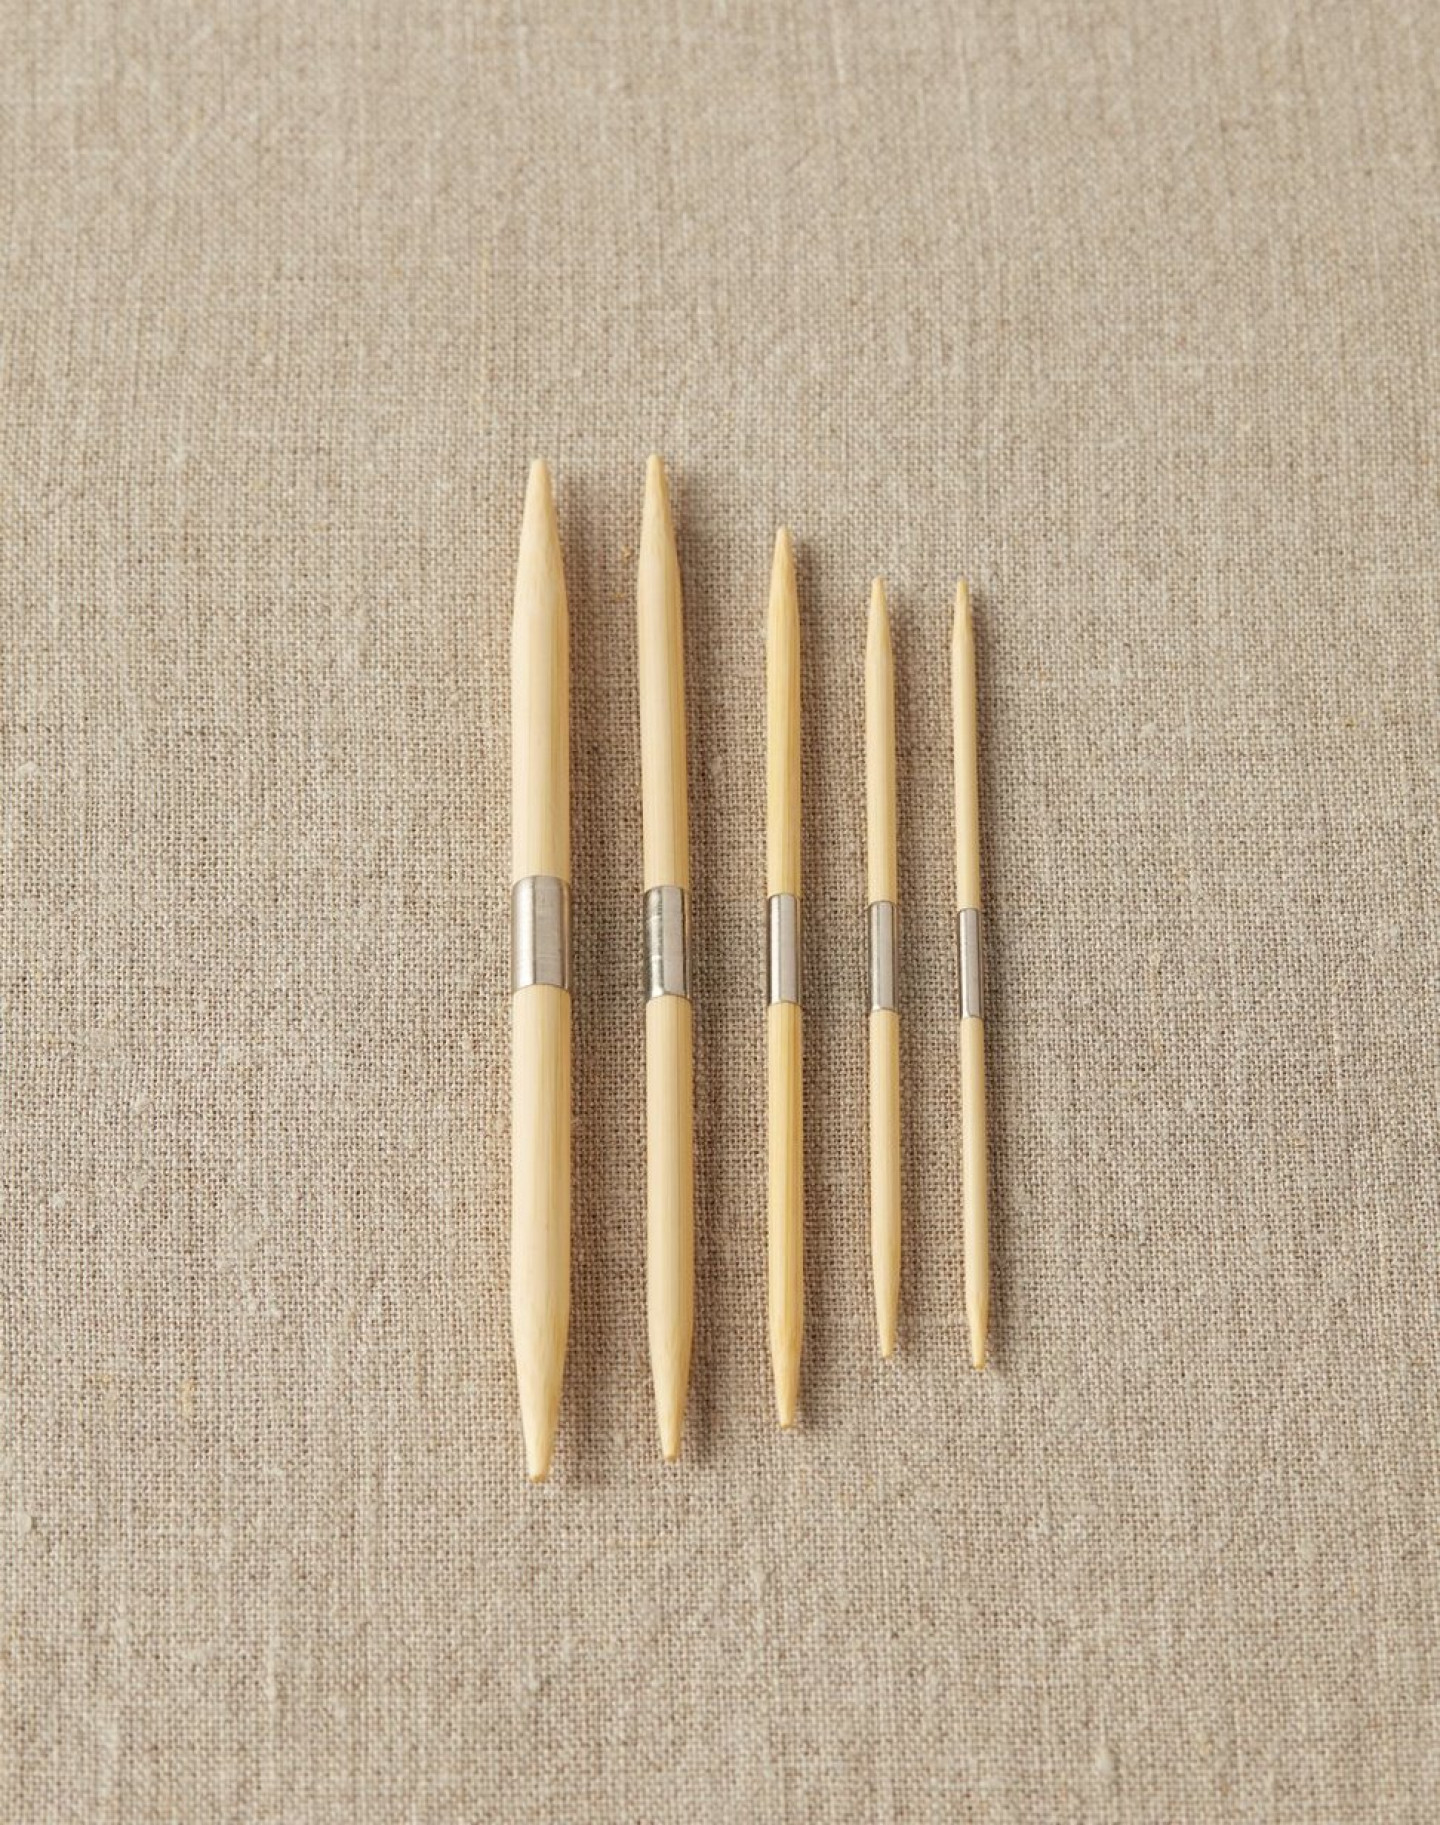 Cocoknits Bamboo Cable Needles Palmikkopuikot